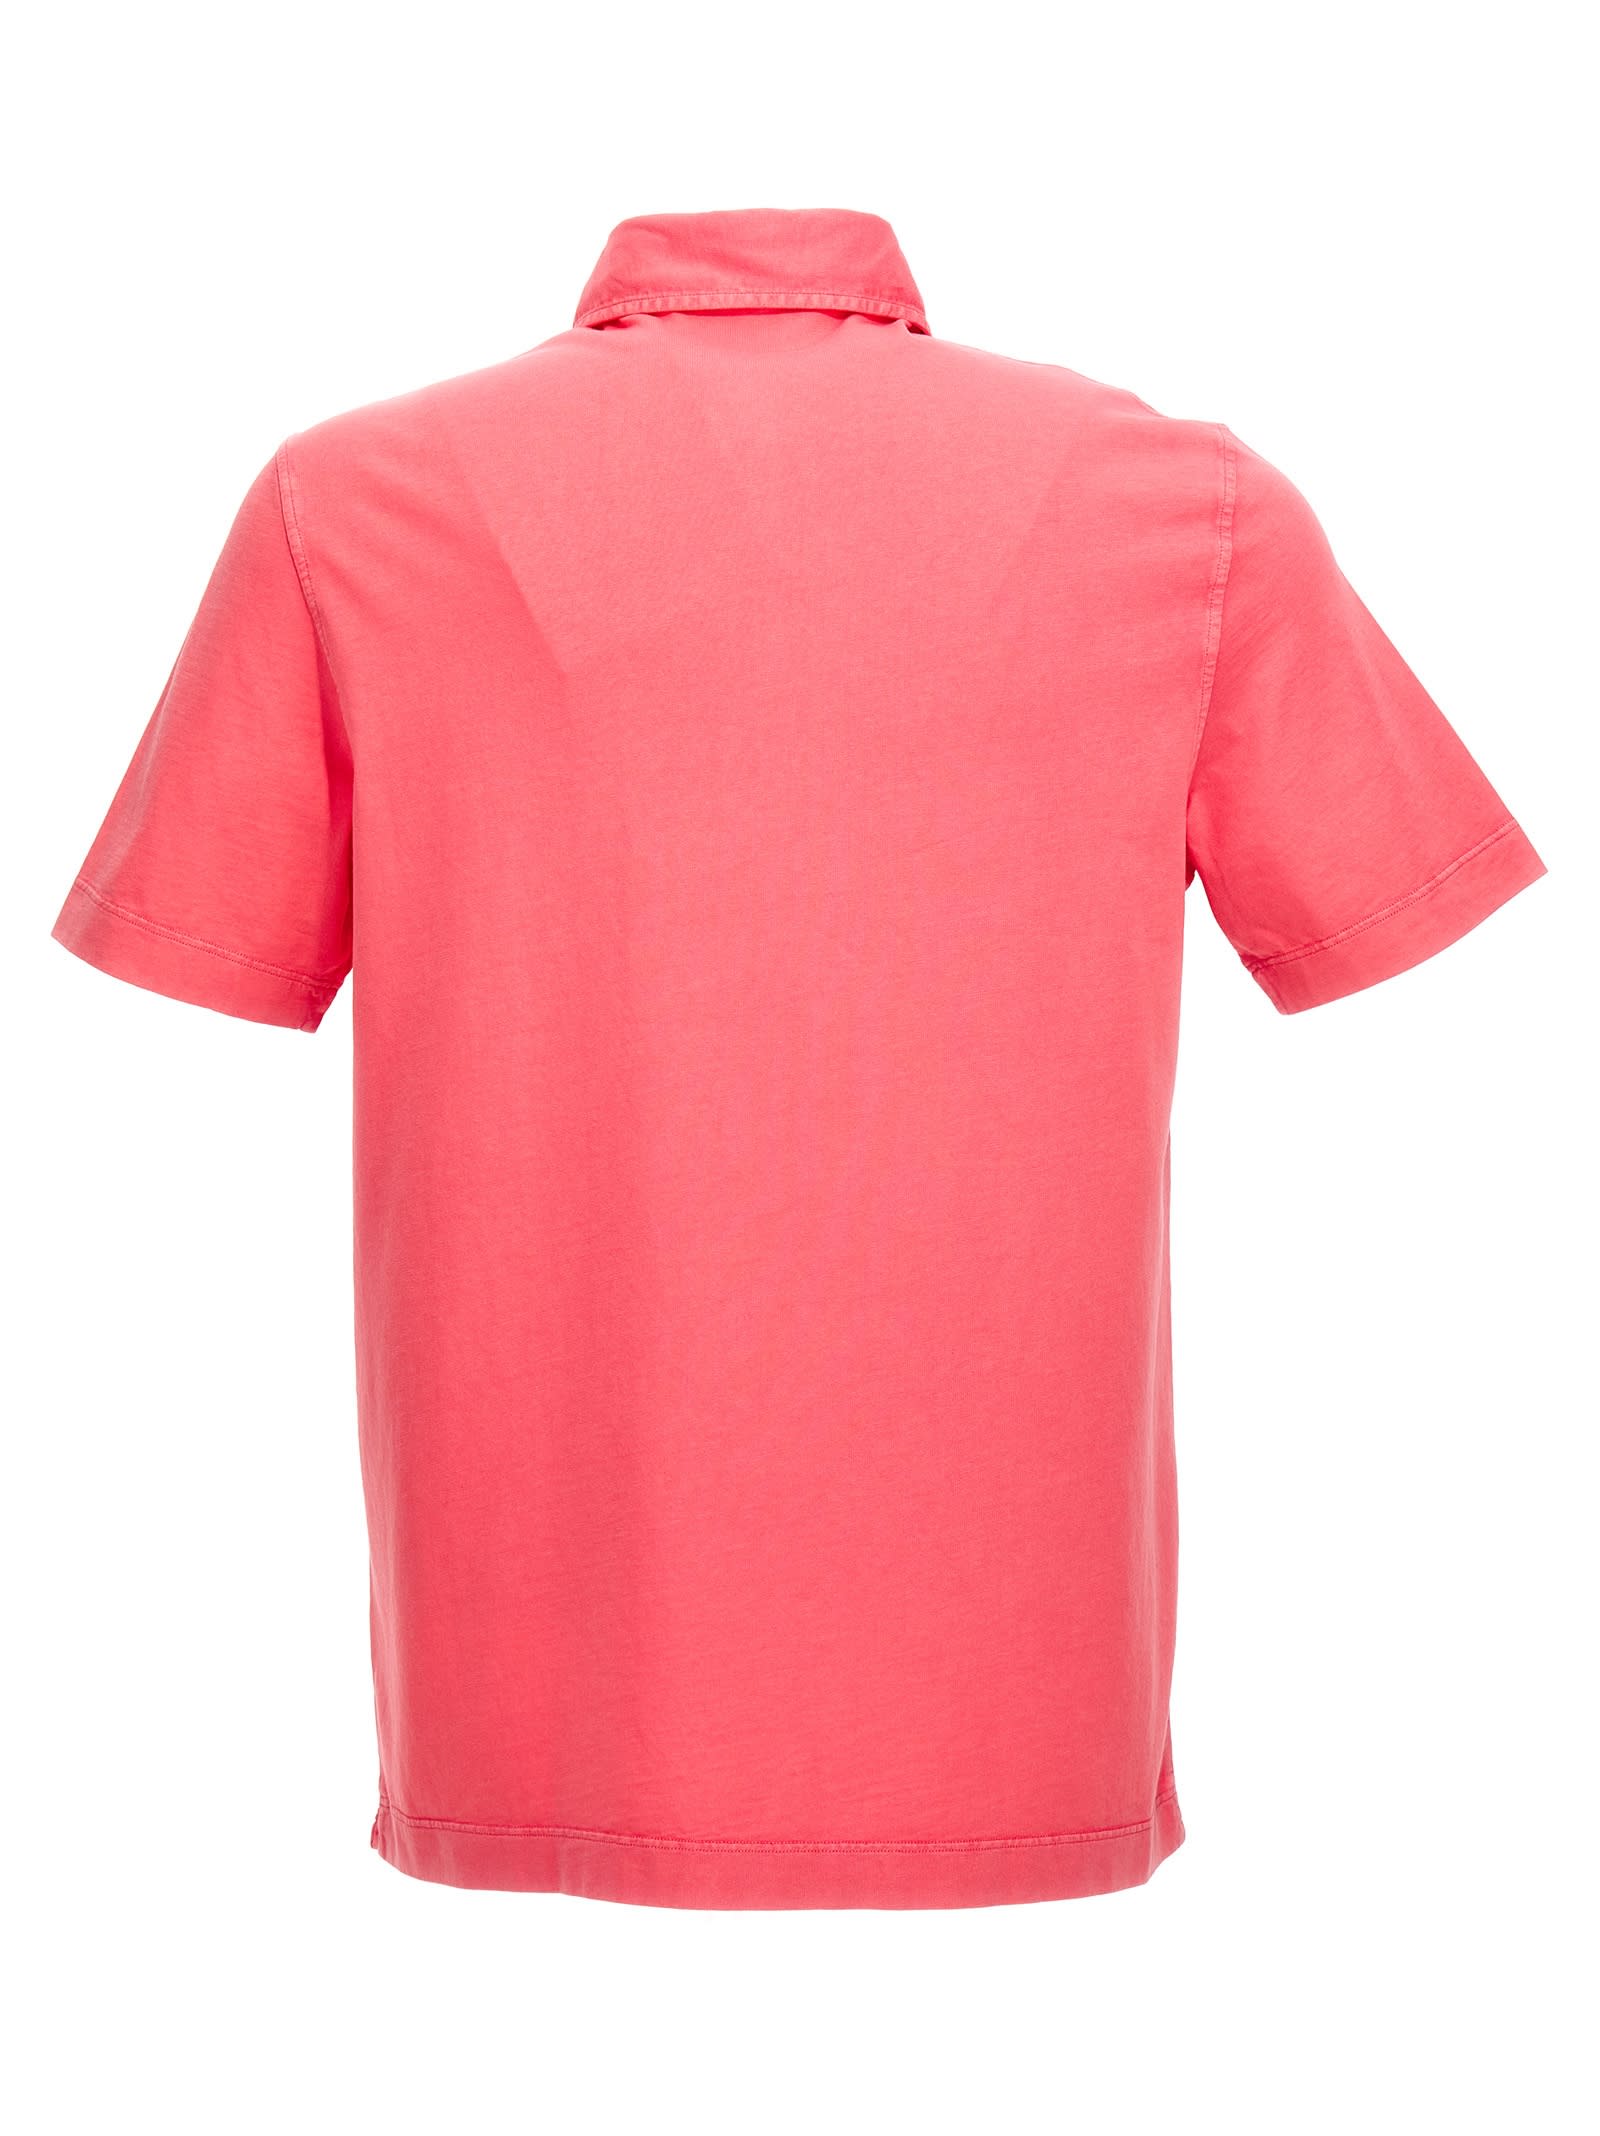 Shop Drumohr Light Cotton Polo Shirt. In Fuchsia